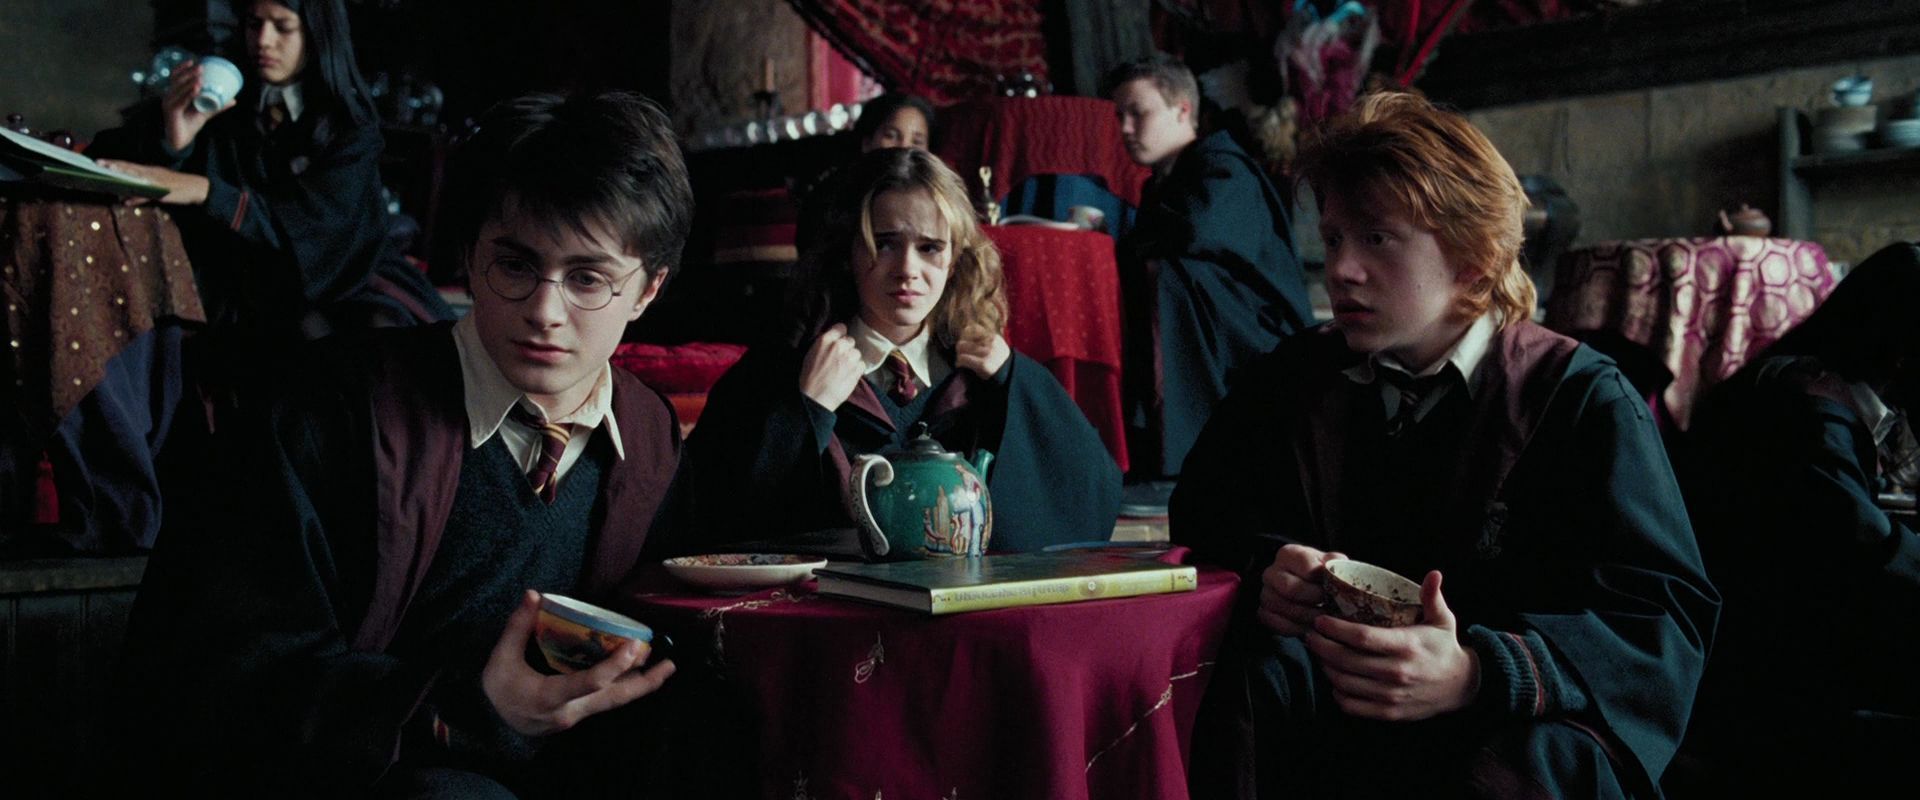 Harry Potter Images on Fanpop.